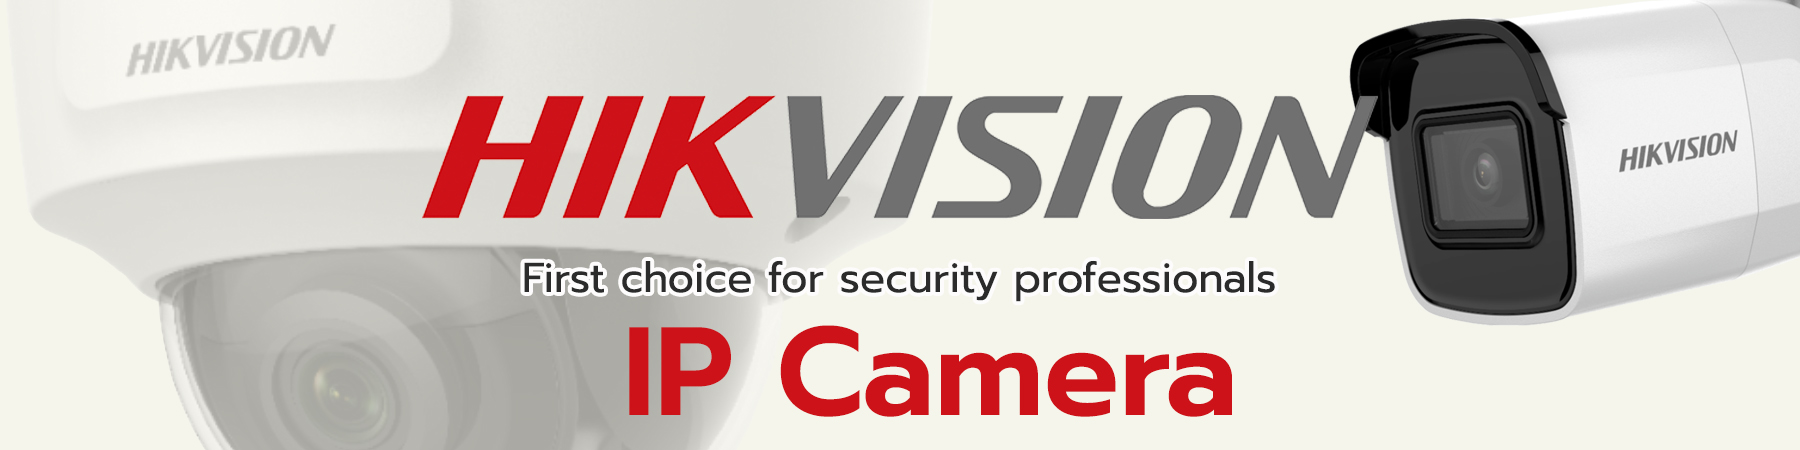 Hikvision IPC, Hikvision EasyIP1.0, Hikvision EasyIP1.0 Plus, Hikvision EasyIP1.0, Hikvision EasyIP3.0, Hikvision EasyIP4.0